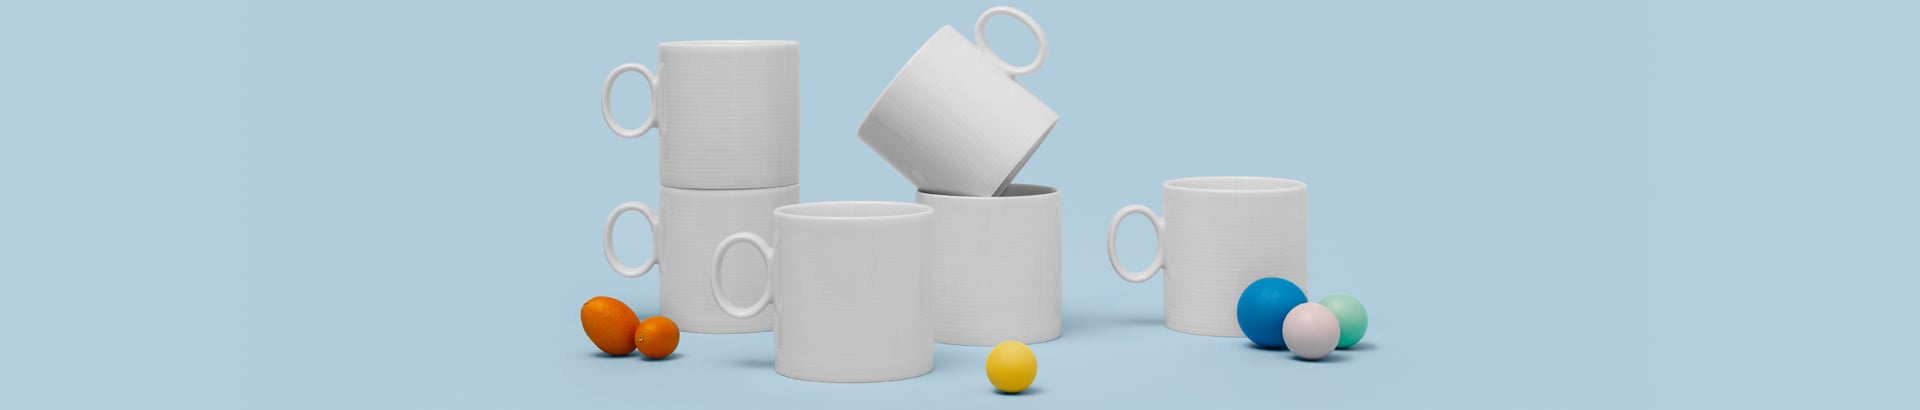 Latte cups